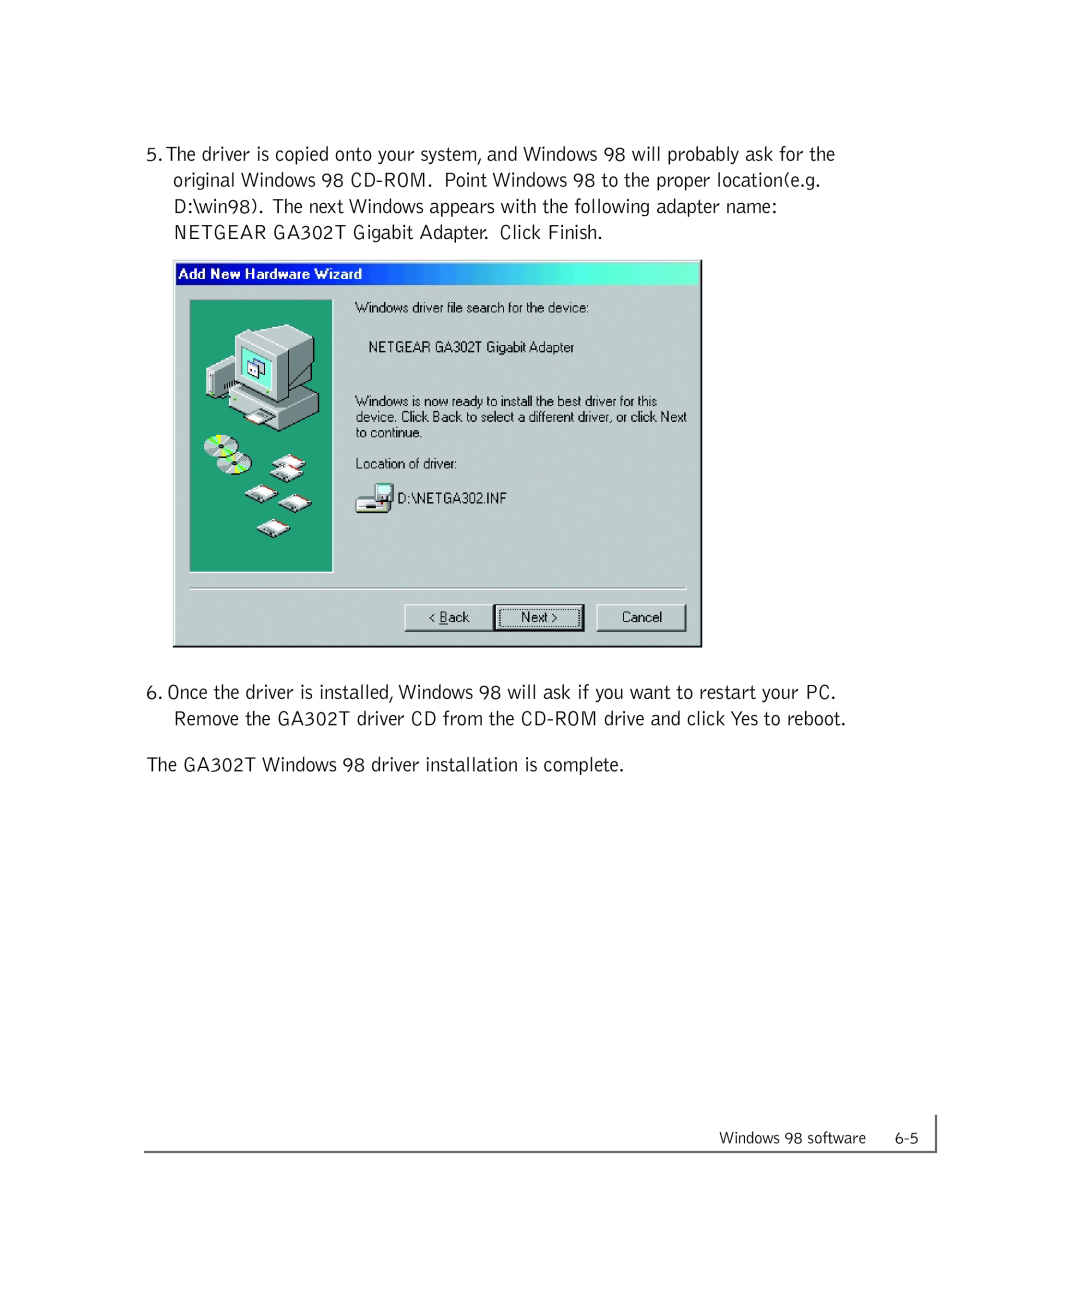 NETGEAR manual The GA302T Windows 98 driver installation is complete 